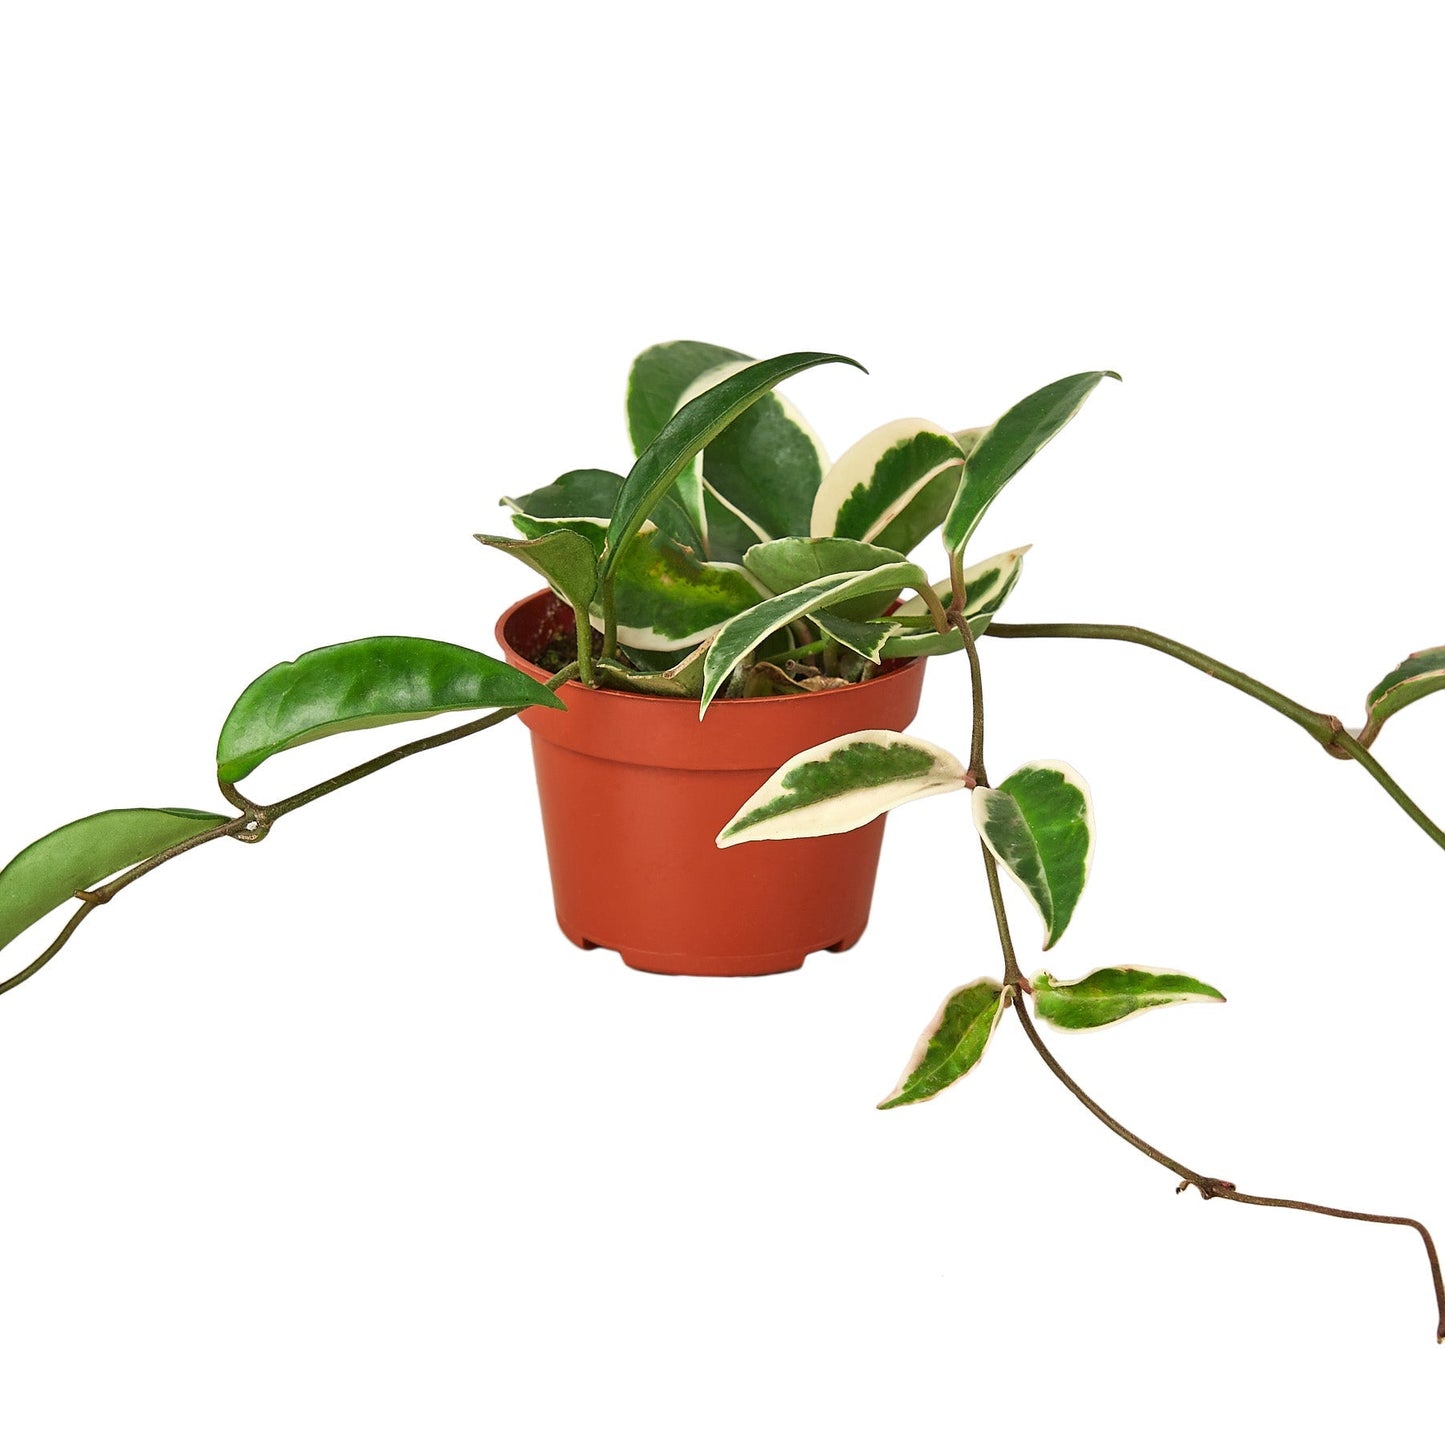 Hoya Carnosa 'Tricolor' - 4" Pot - One Beleaf Away Plant Studio